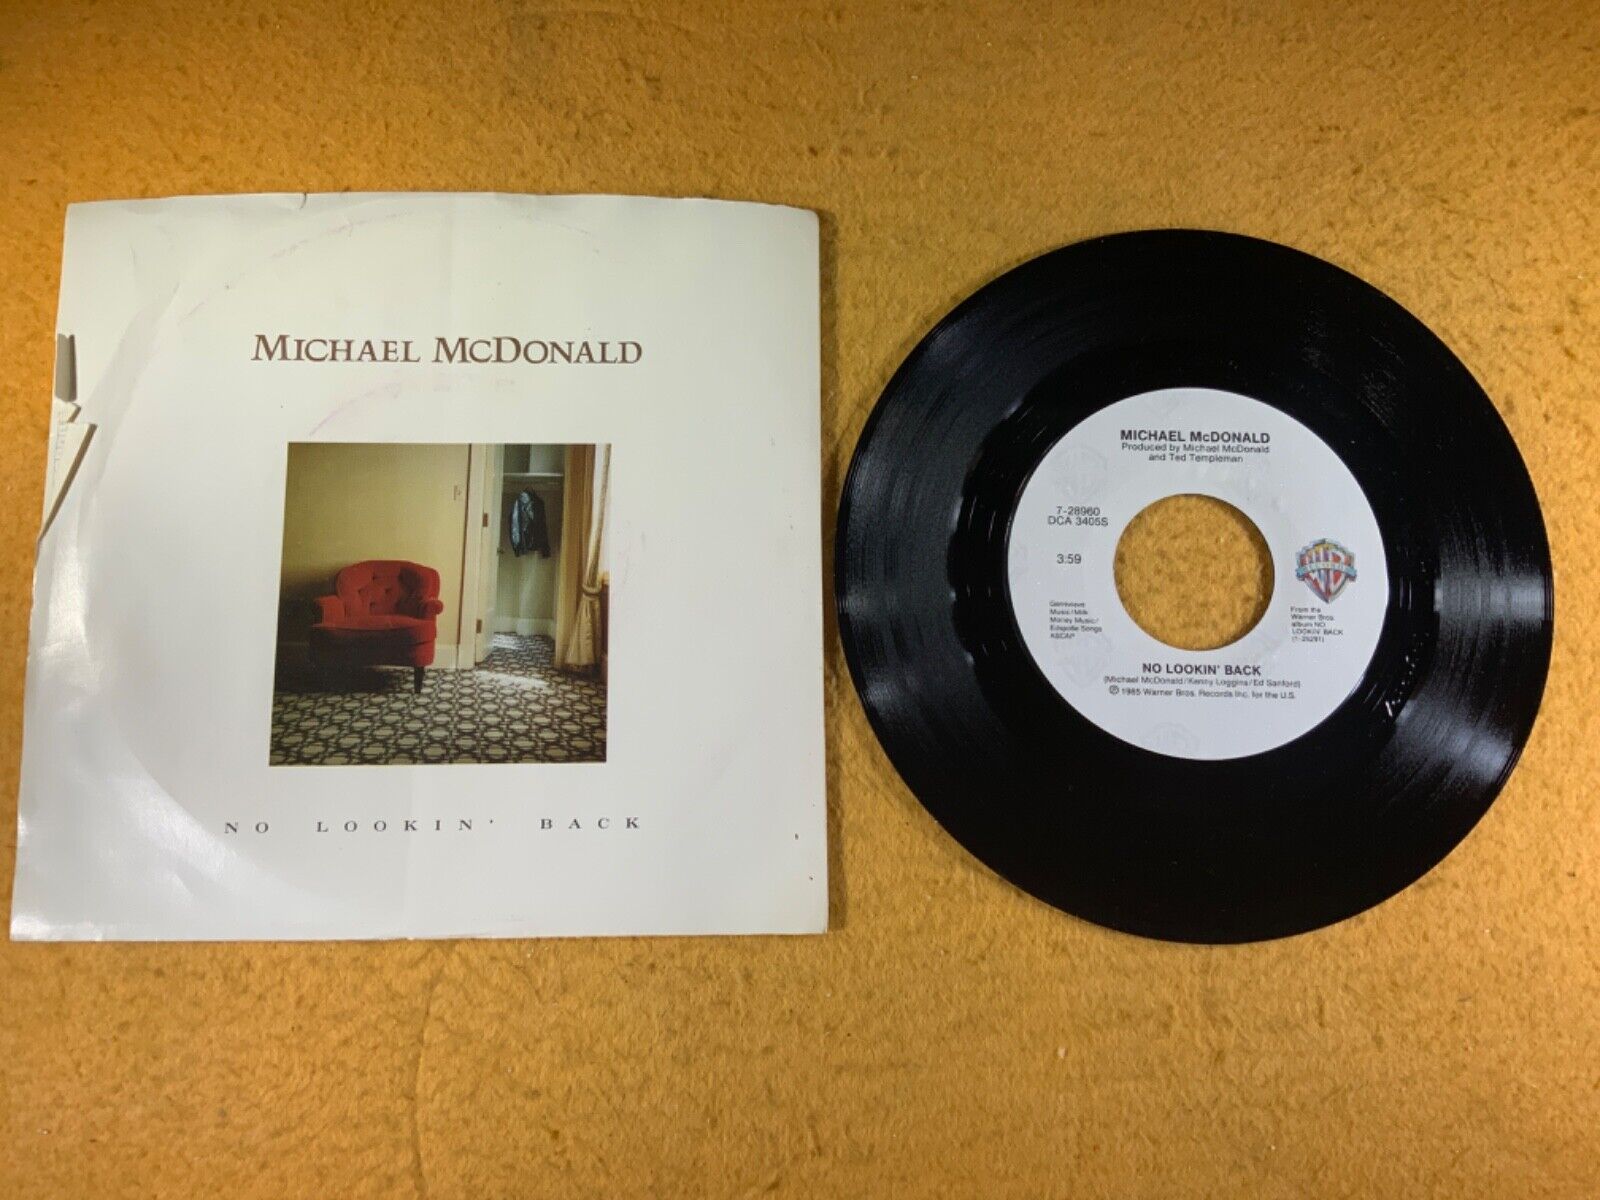 Z4-1 MICHAEL McDONALD No Looking Back / Don’t Let Me Down - 1985 - 7-28960 